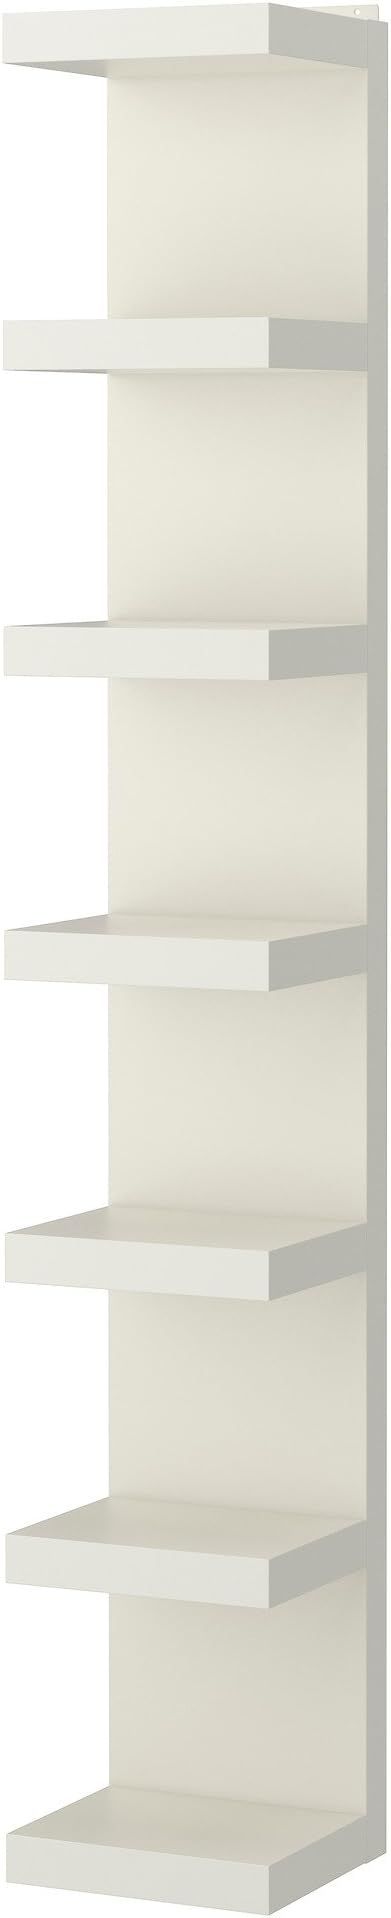 Ikea LACK Rack Wall Shelf Unit, White 402.821.87 | Amazon (US)